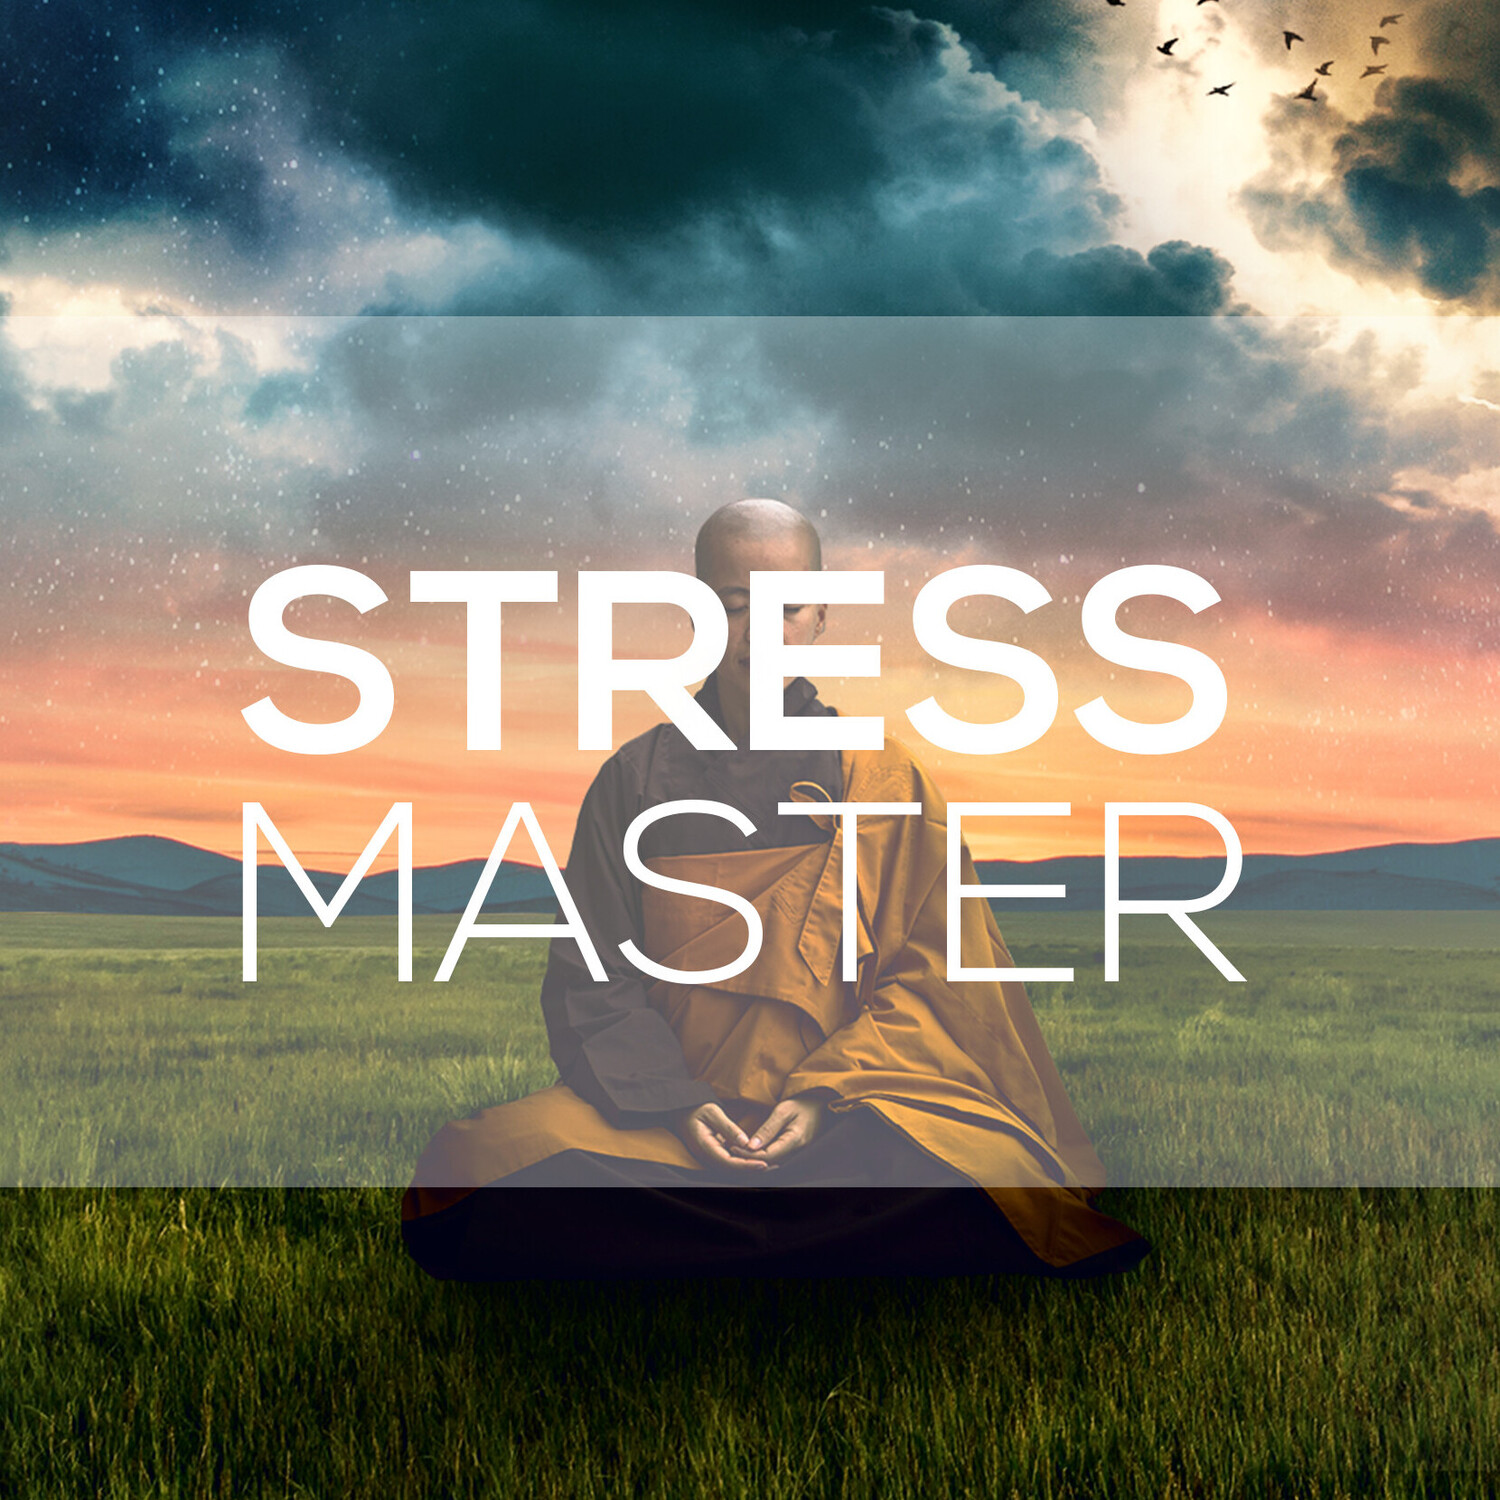 Stress Master